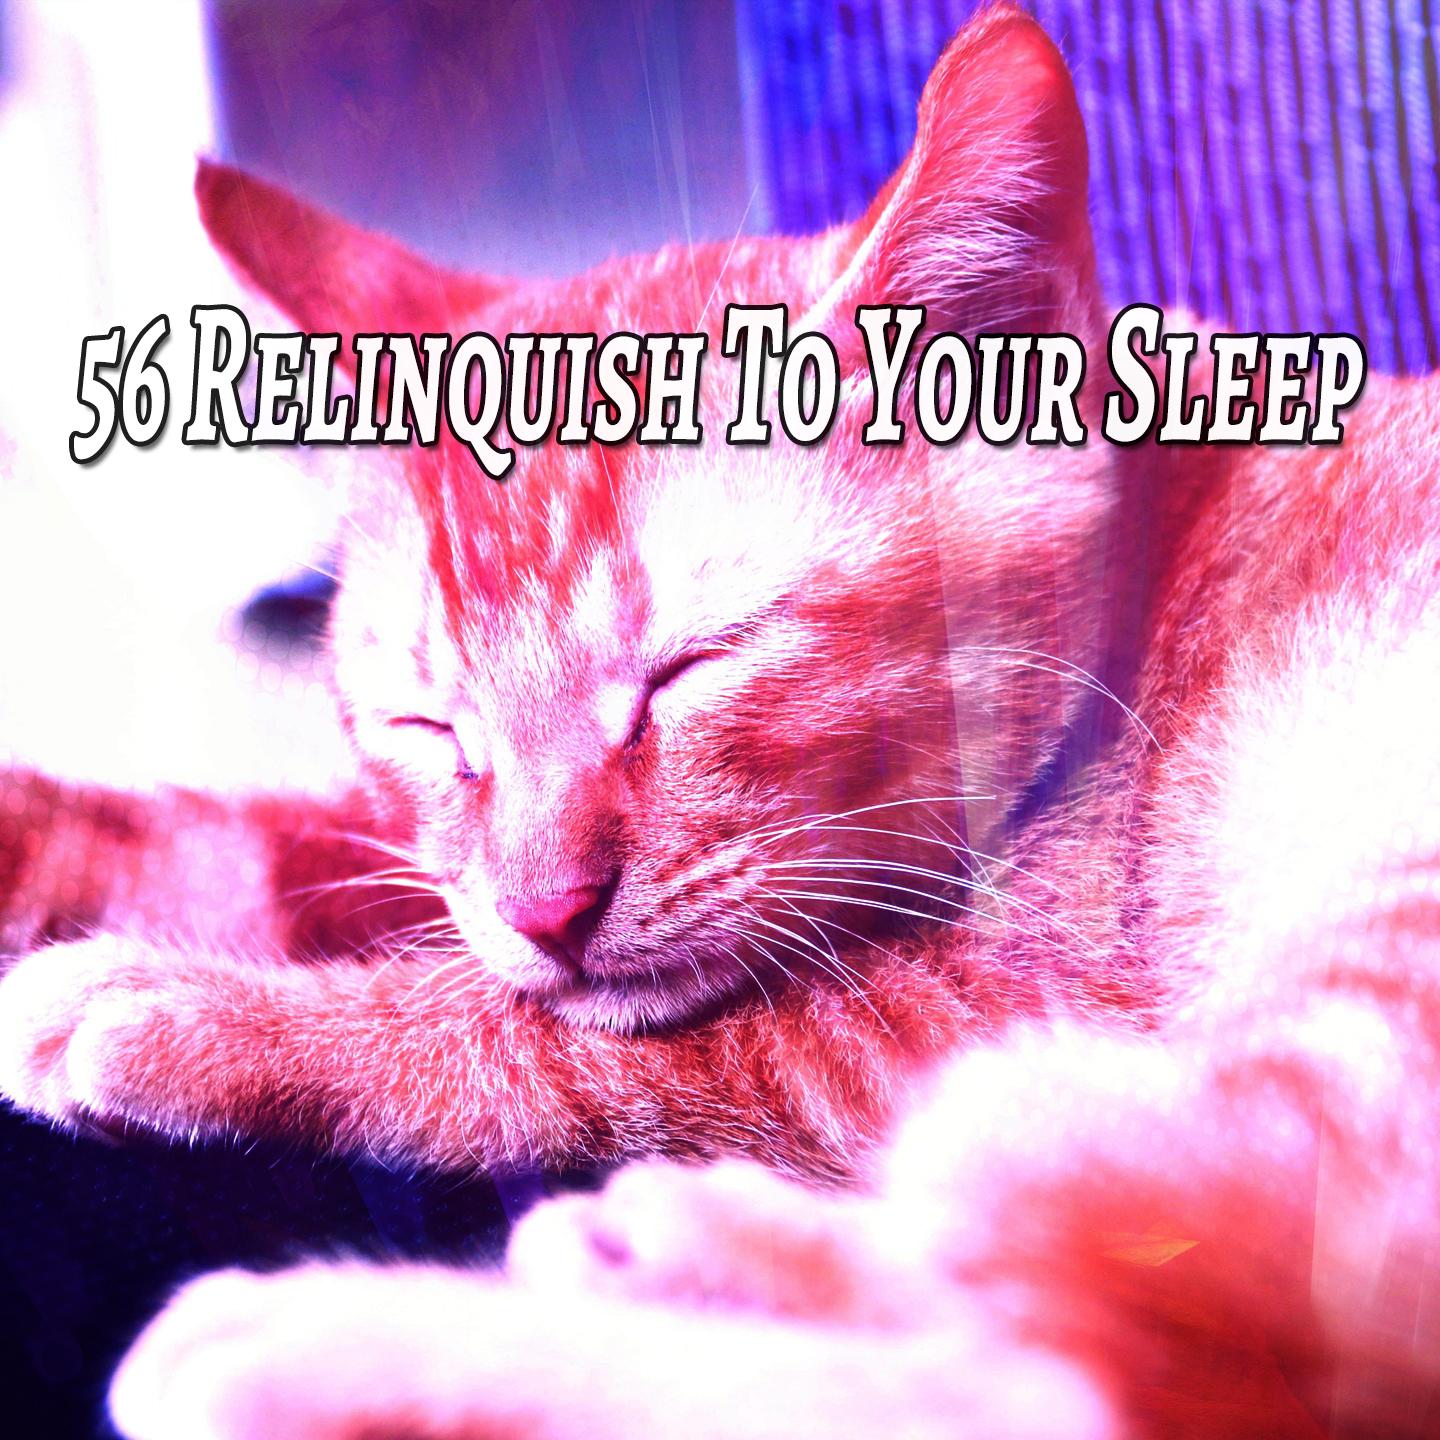 56 Relinquish To Your Sleep